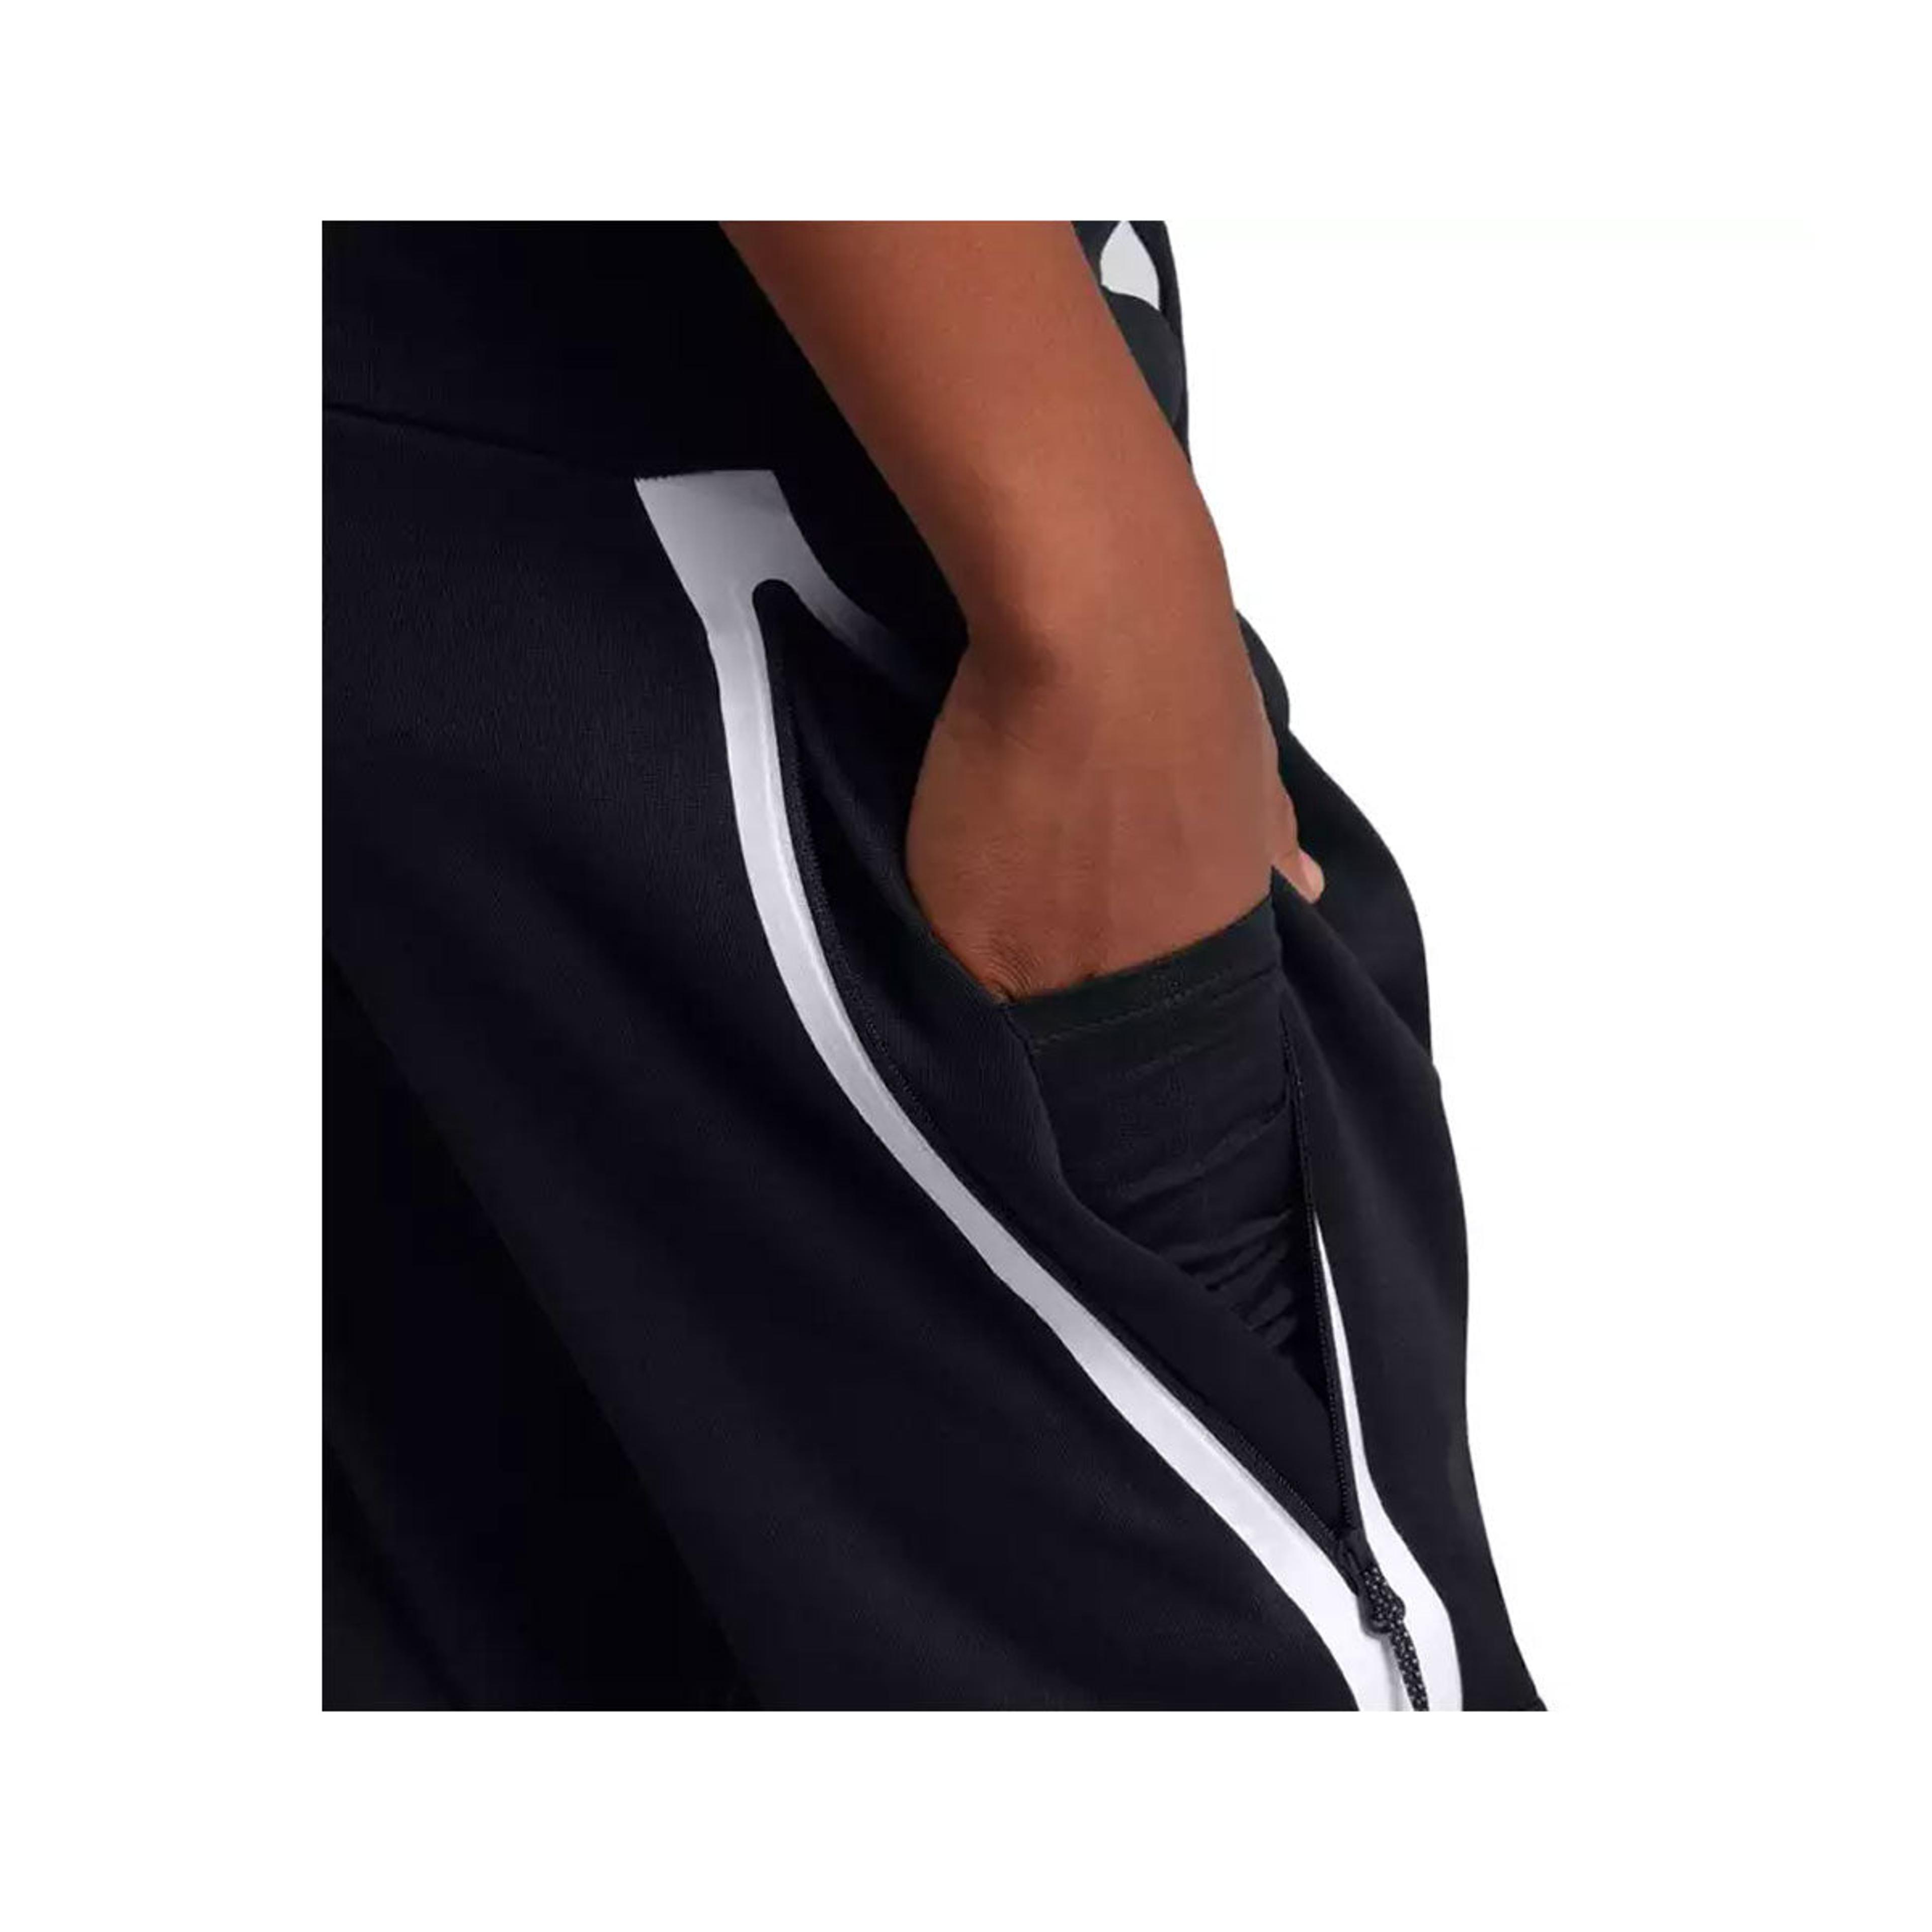 Alternate View 2 of Nike Boy's Tech Fleece Pants Joggers